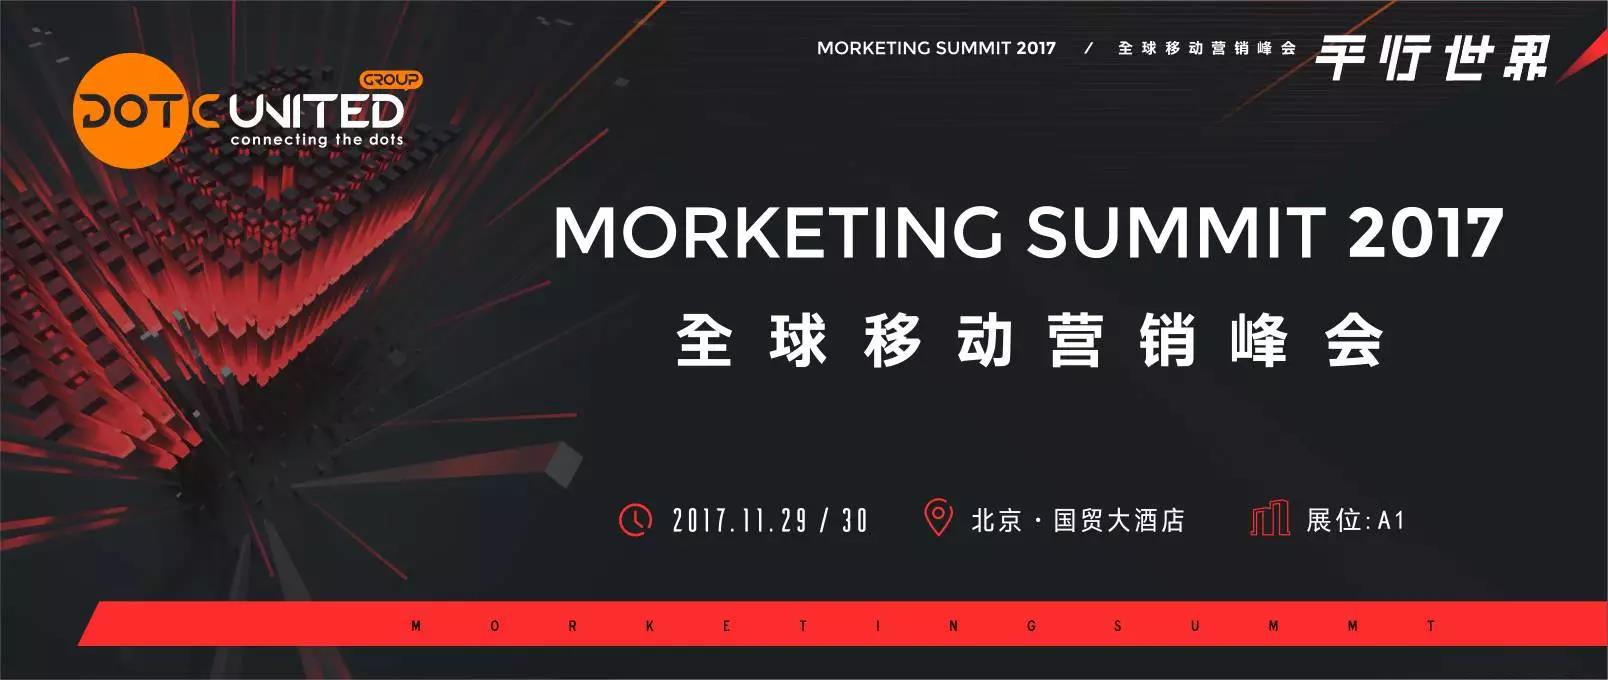 MS2017全球移动营销峰会将在北京国贸大酒店盛大开幕